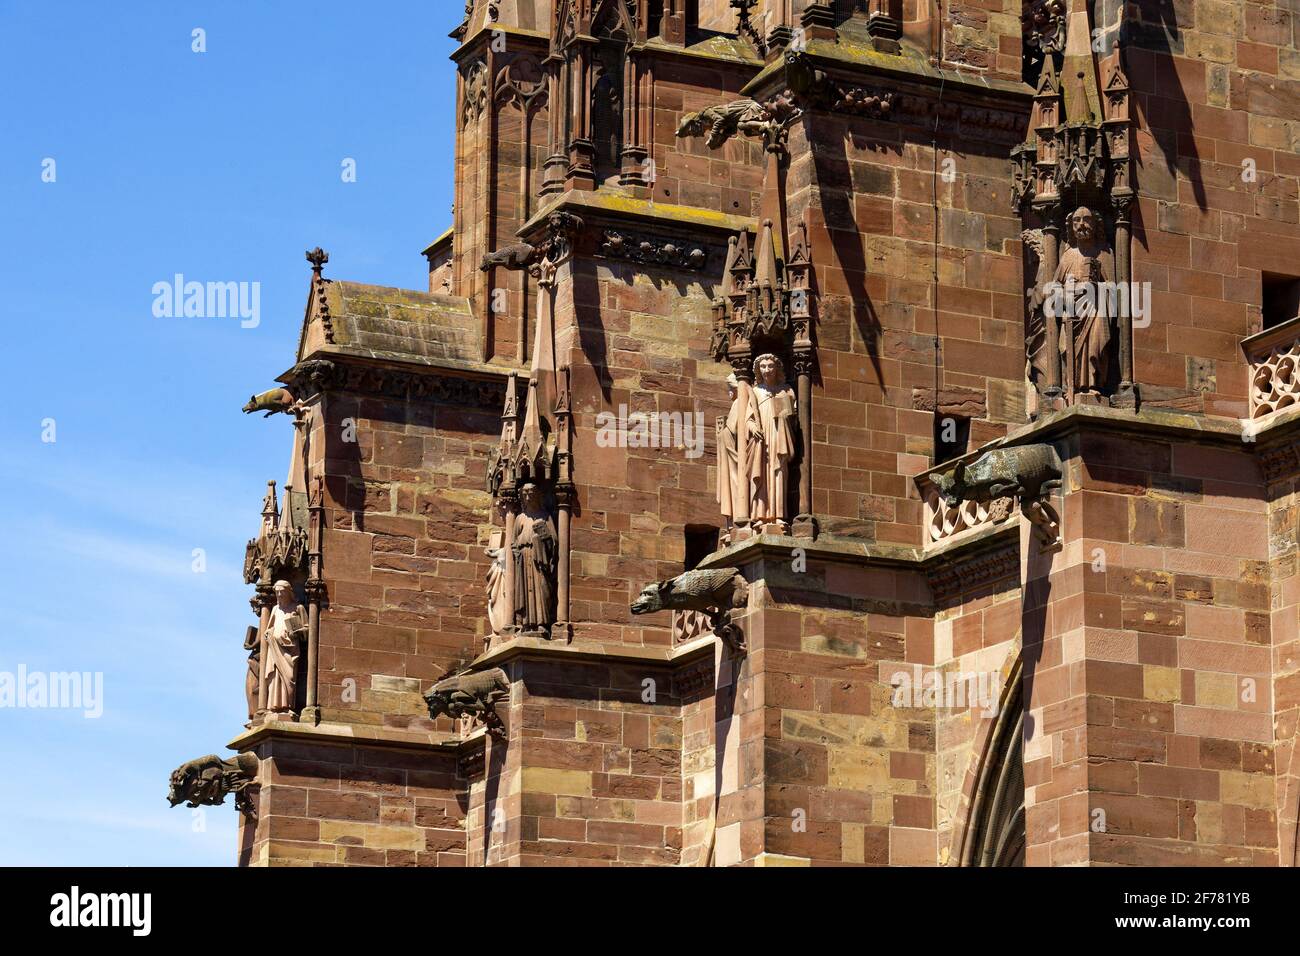 Germania, Baden Wurttemberg, Freiburg im Breisgau, la cattedrale (Münster) Foto Stock